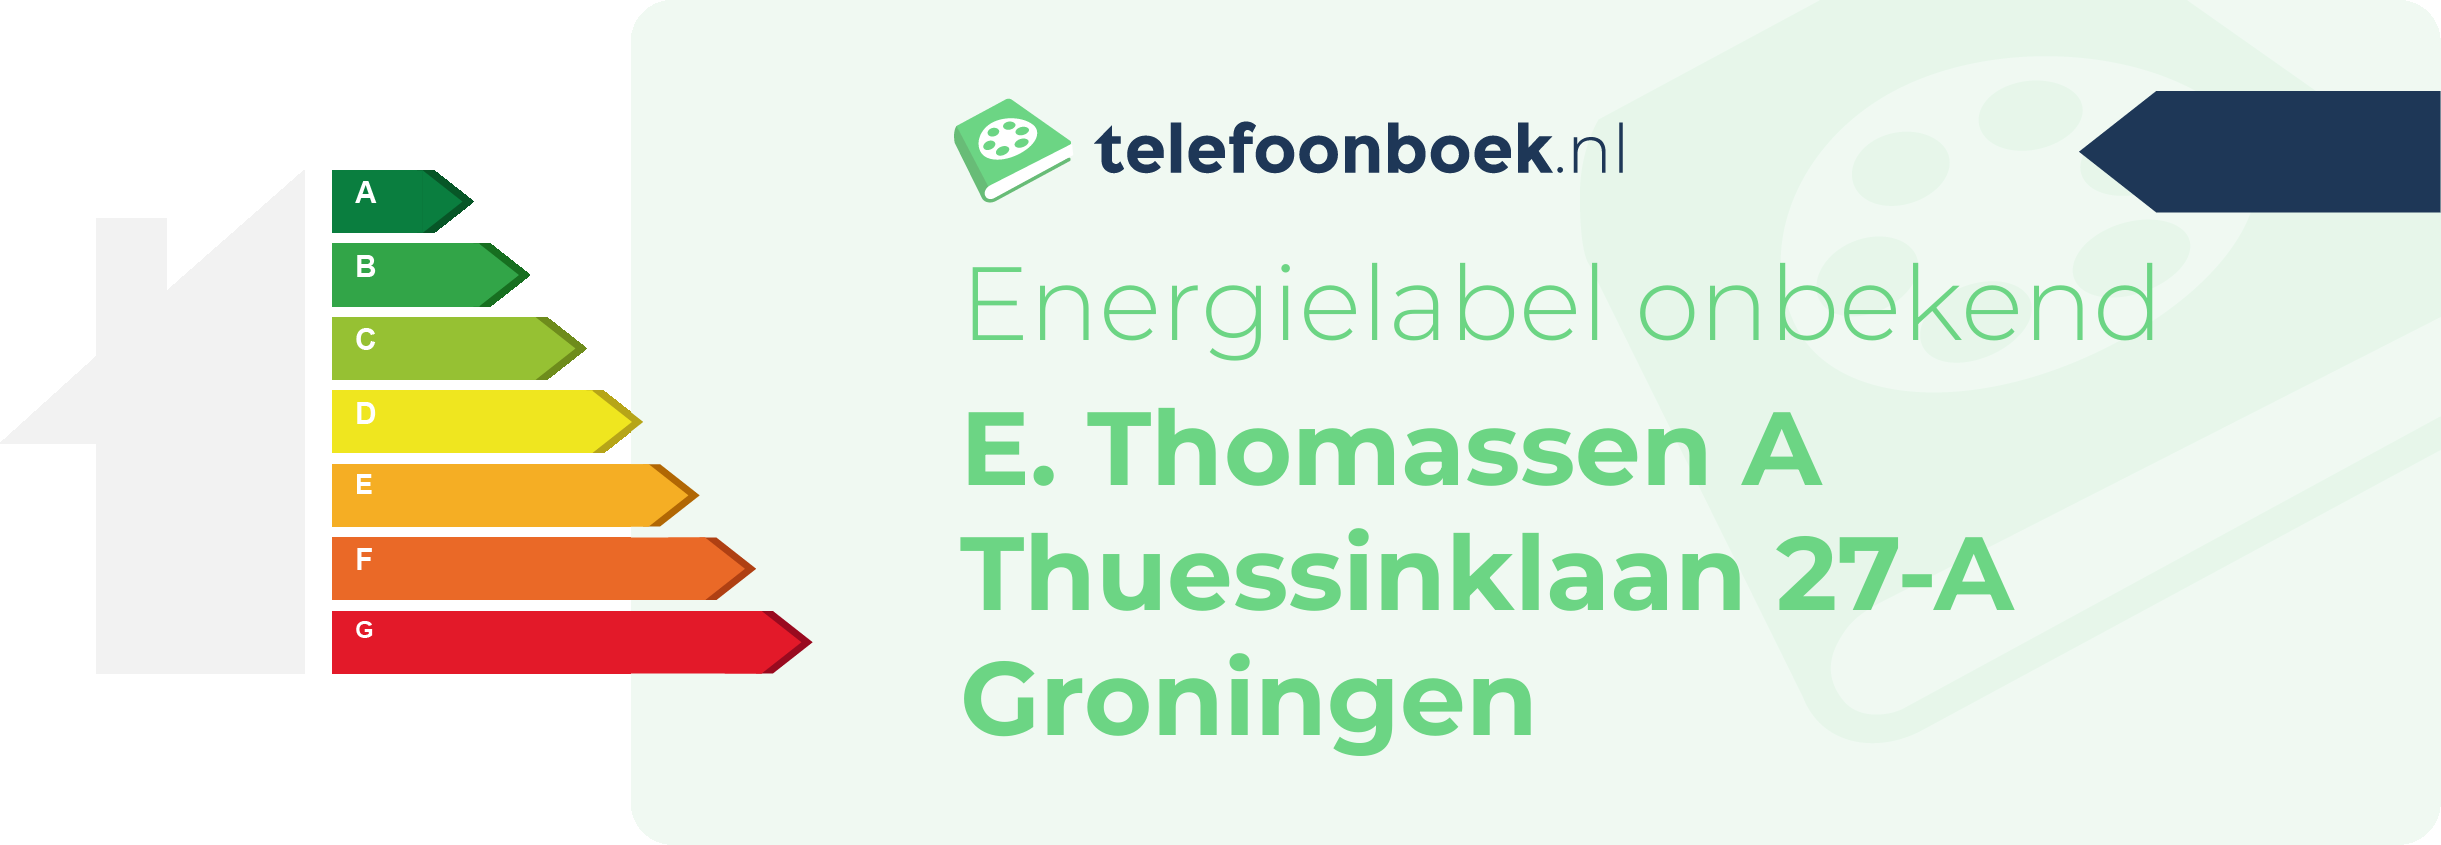 Energielabel E. Thomassen A Thuessinklaan 27-A Groningen